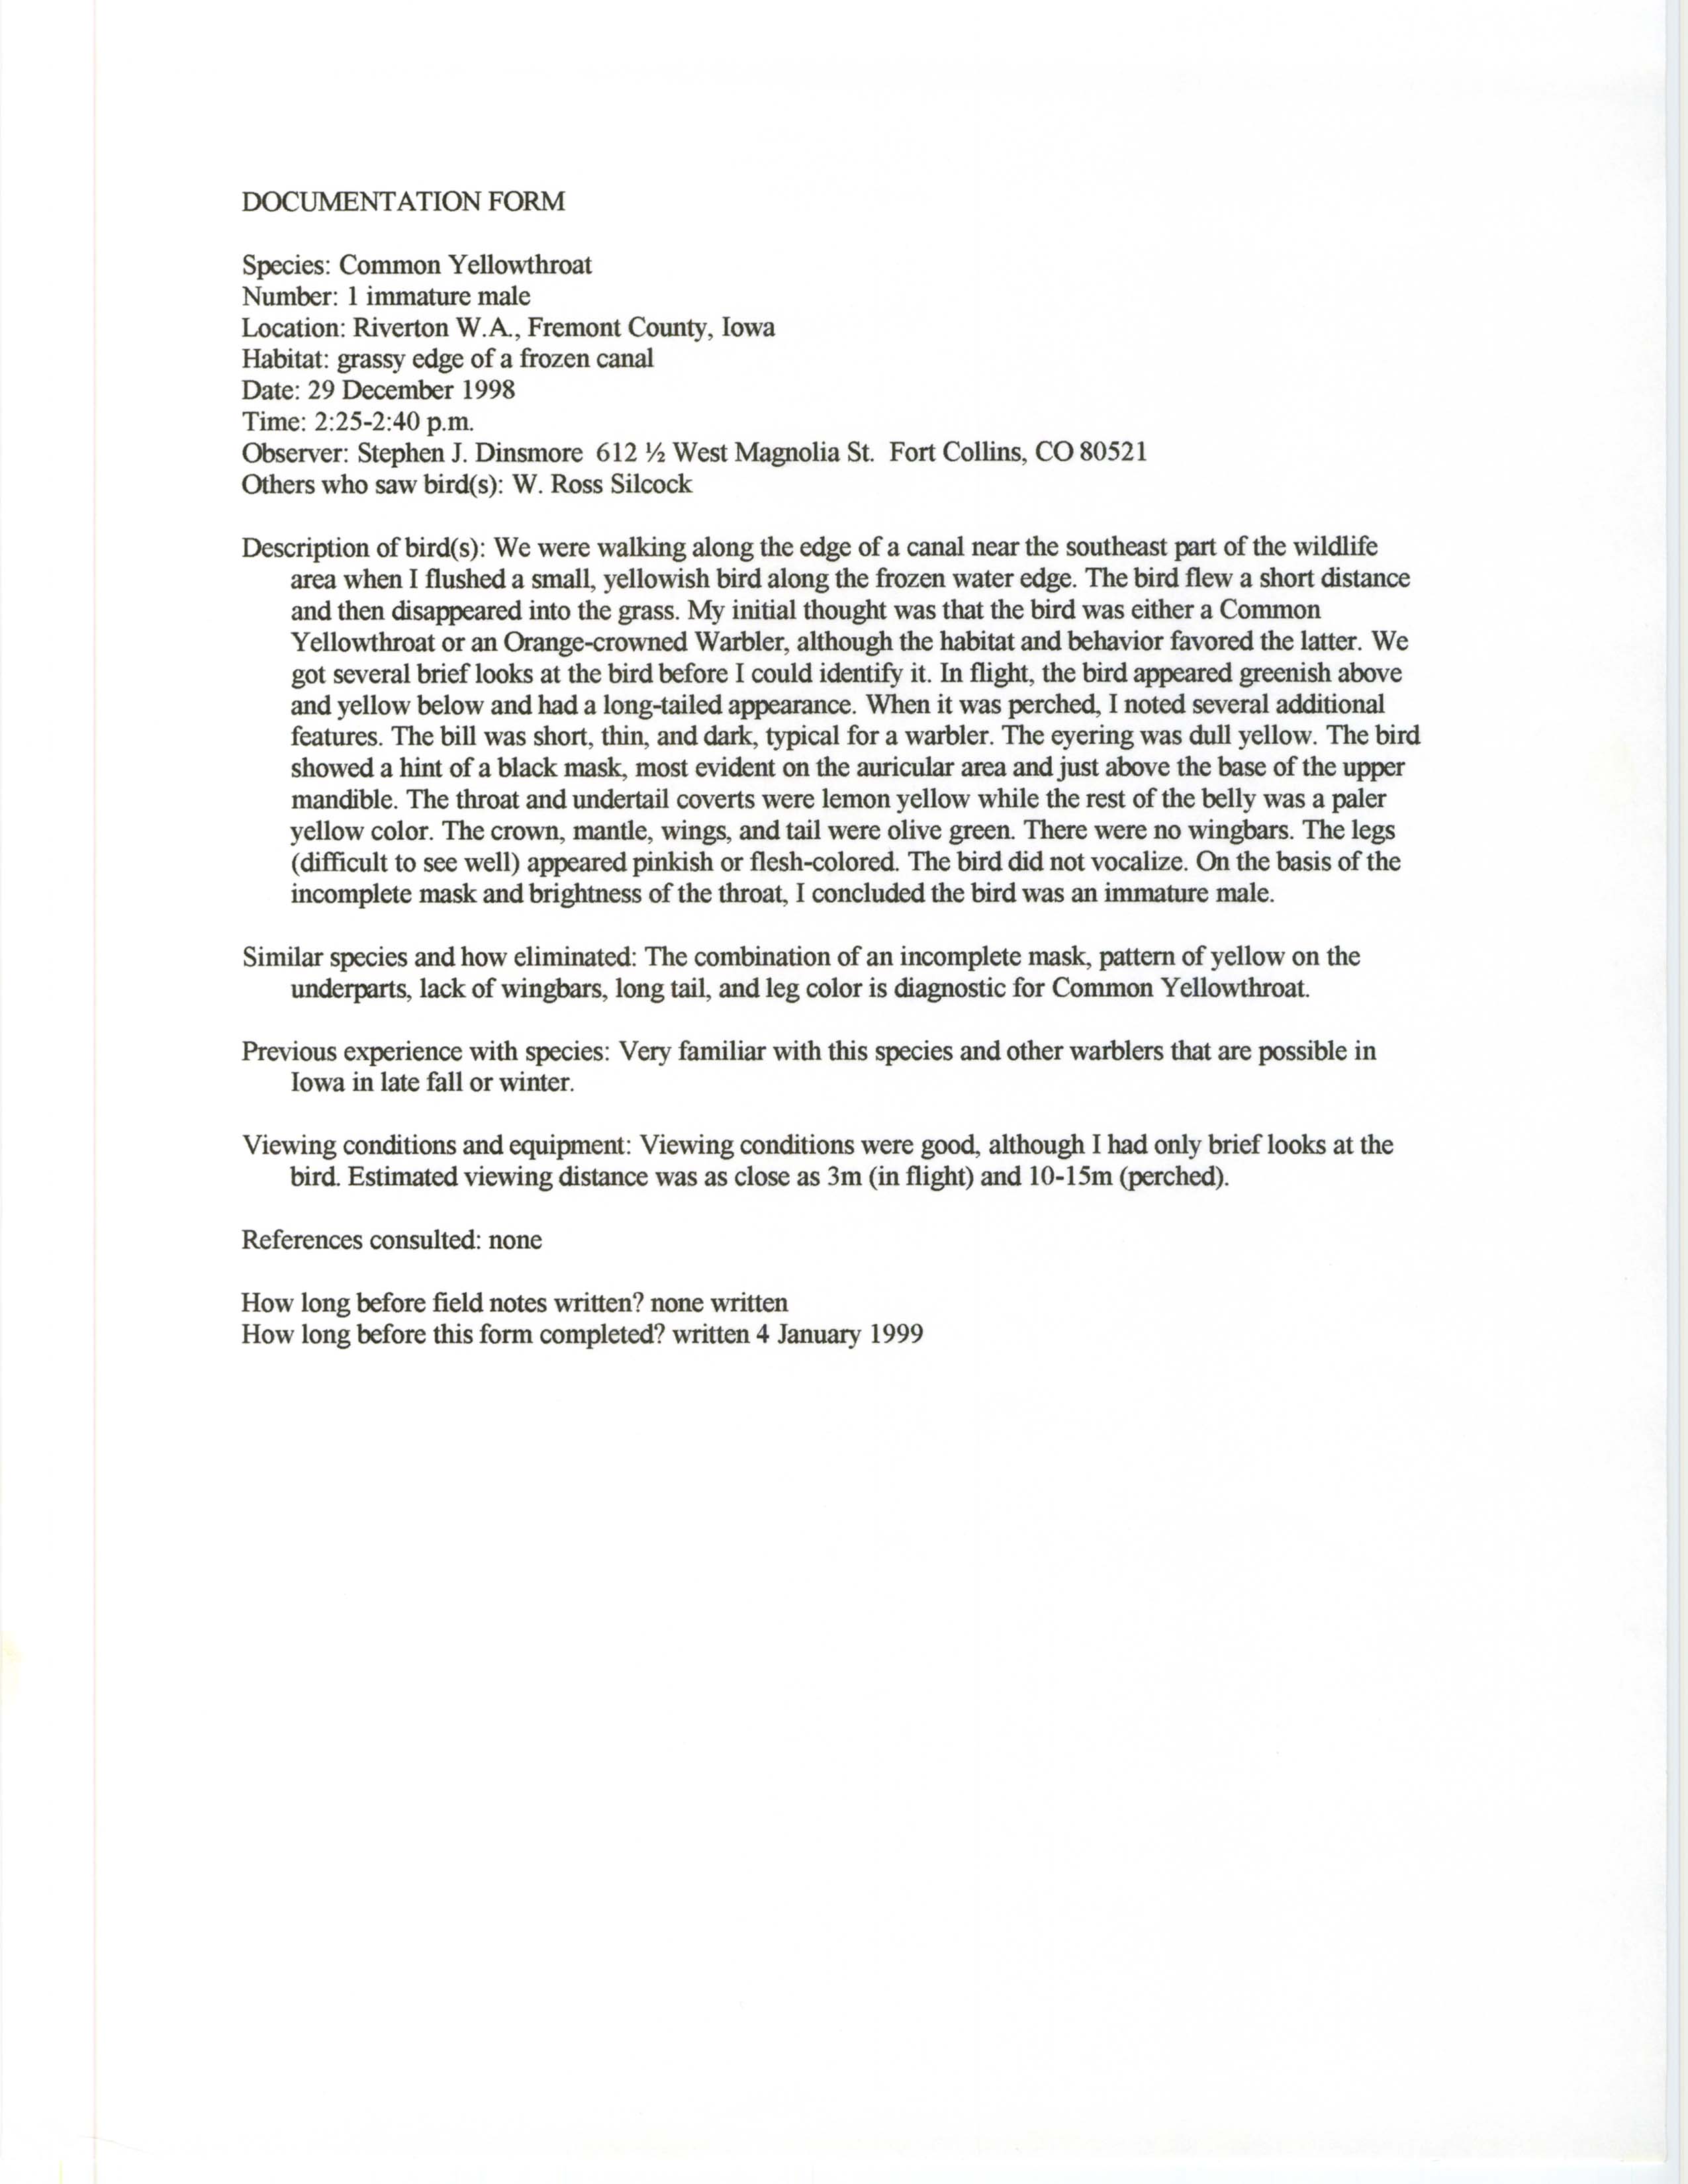 Rare bird documentation form for Common Yellowthroat at Riverton Wildlife Area, 1998